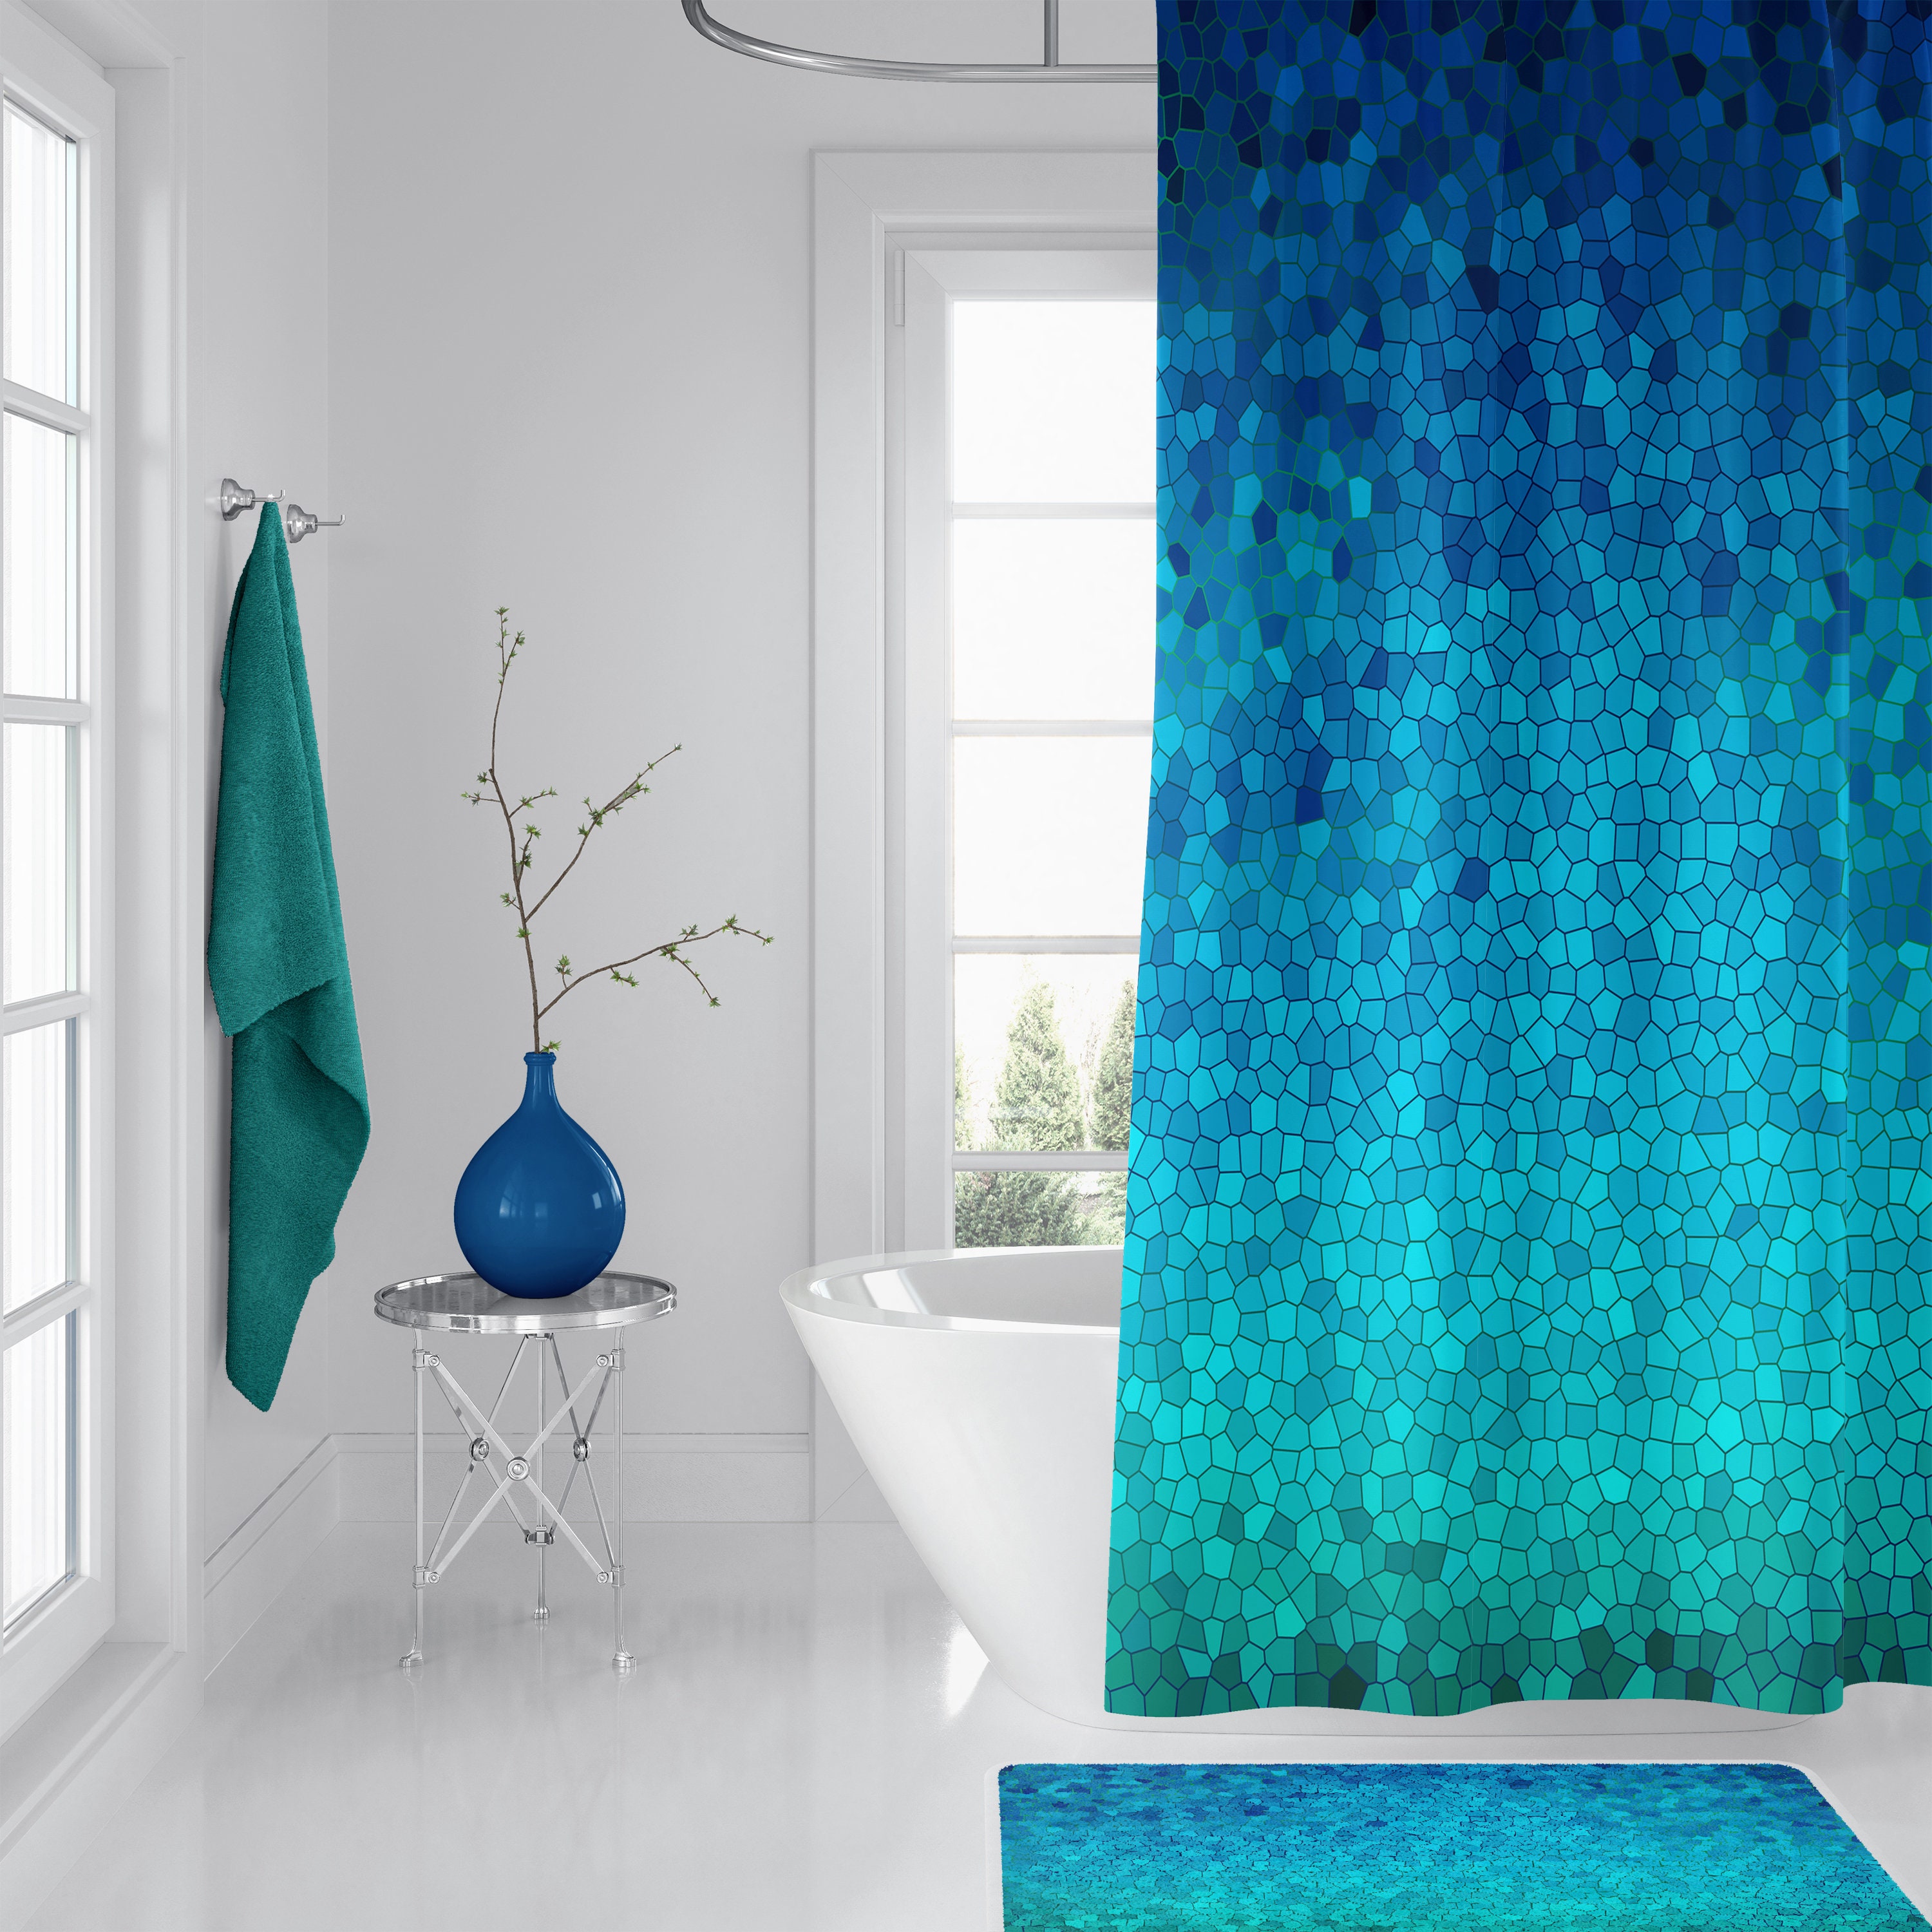 Home Decorators Collection 17 in. x 24 in. Aqua Green Textured Border Cotton Machine Washable Bath Mat, Blue